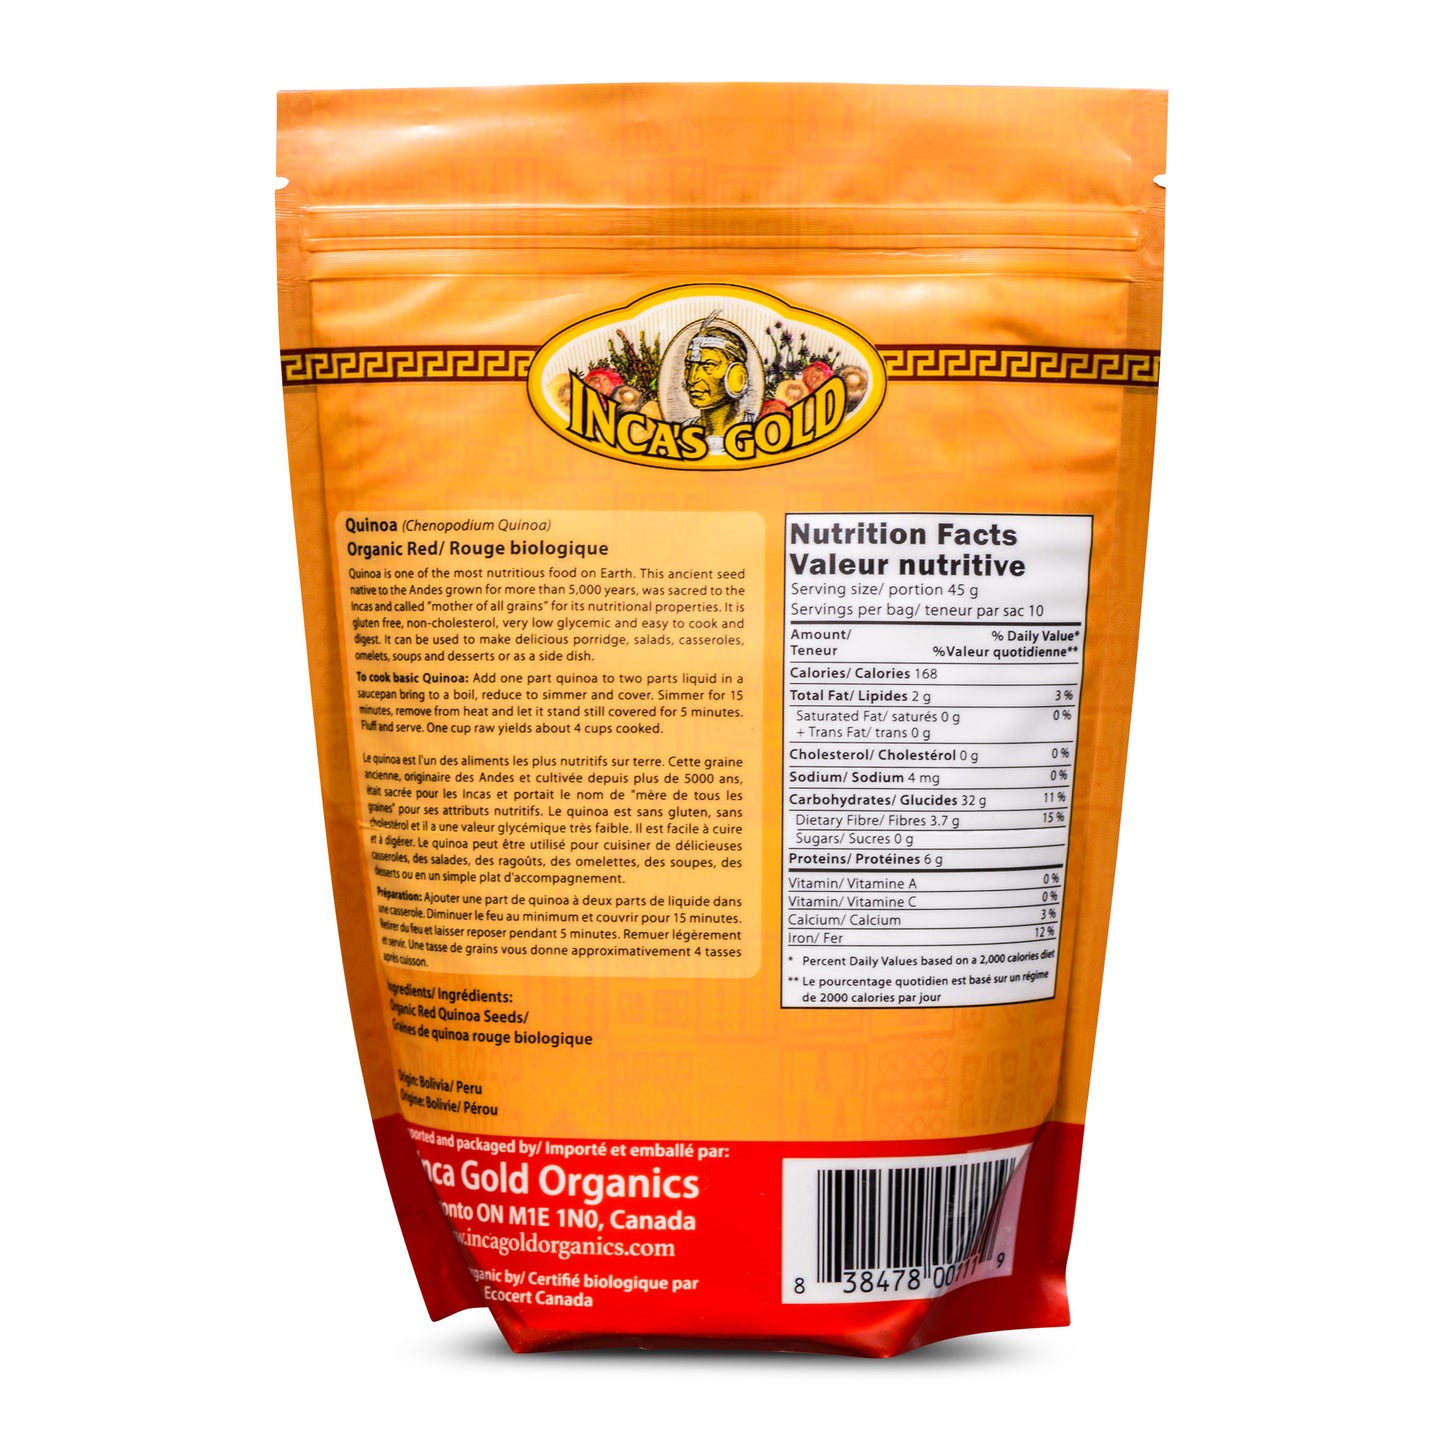 INCA'S GOLD Organic Red Quinoa 454g information